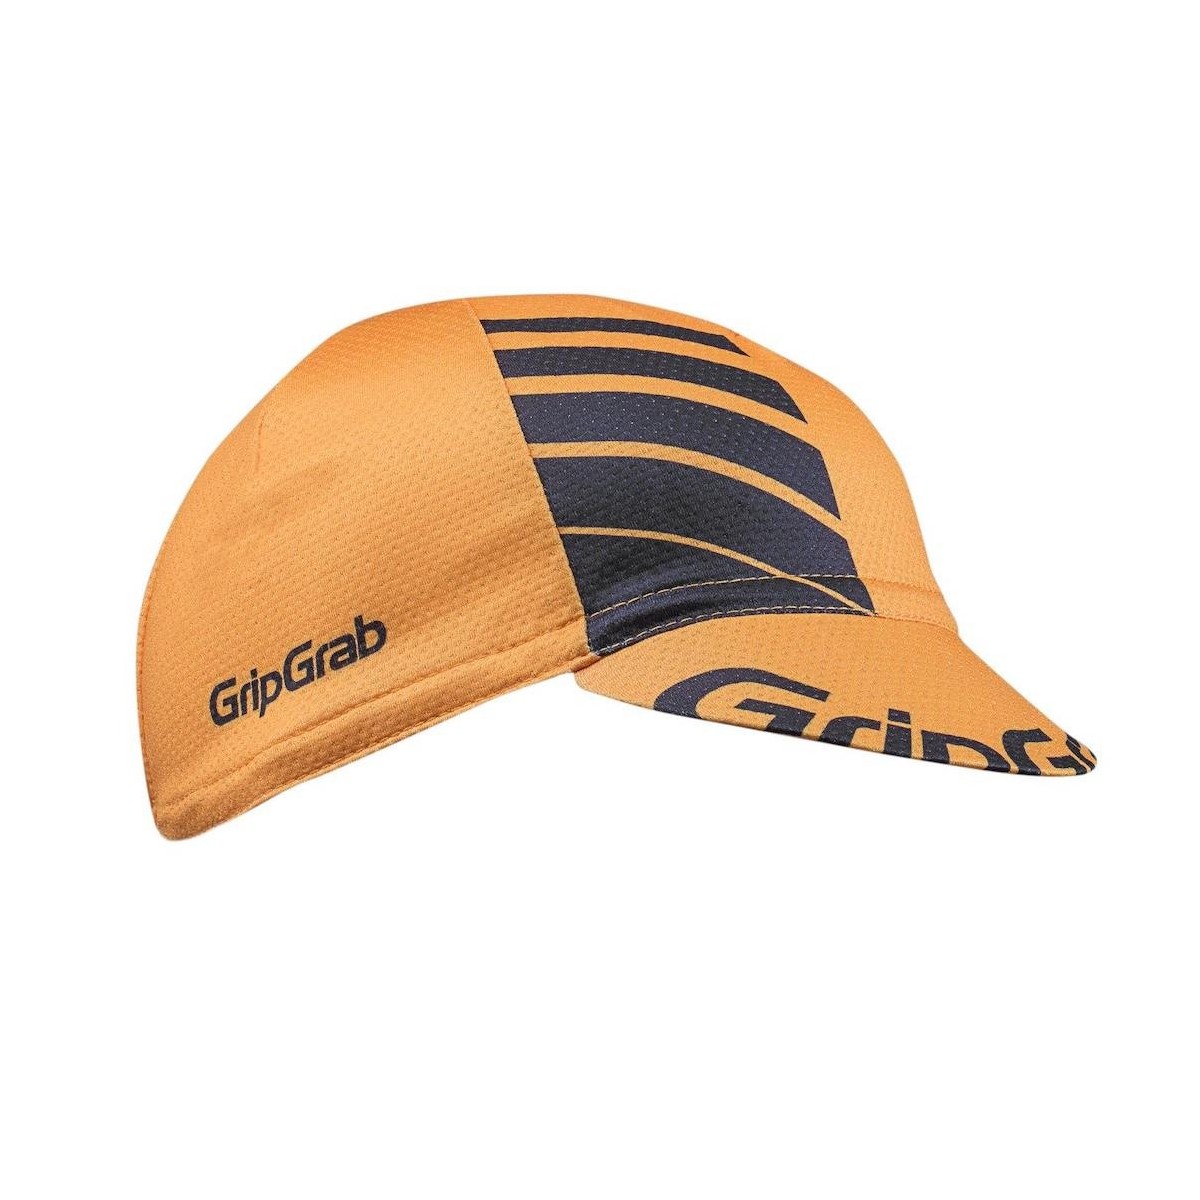 GRIPGRAB Lightweight Summer Cycling Cap - orange/black